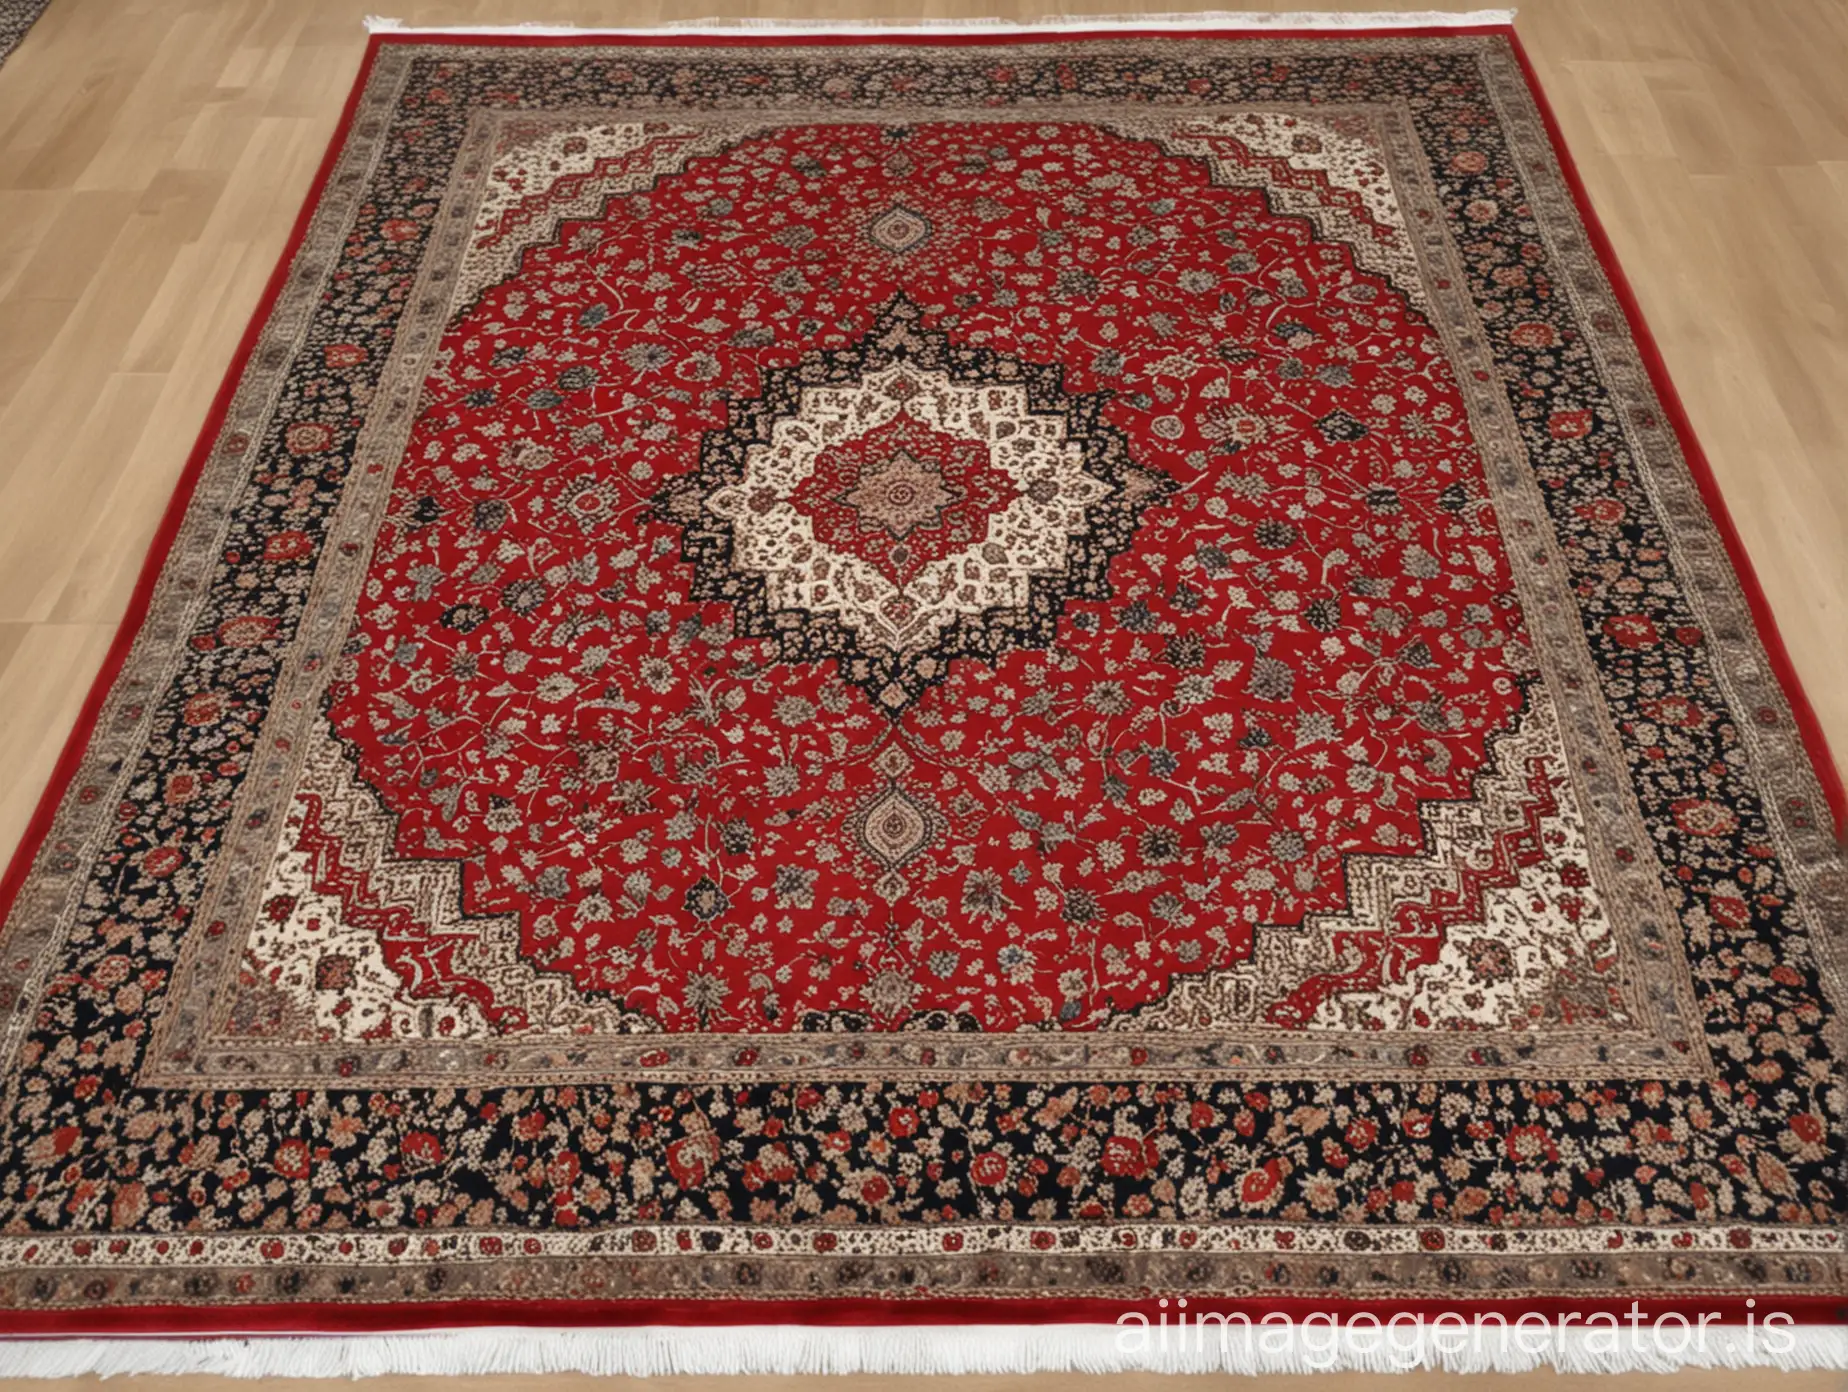 Luxury Persian carpet